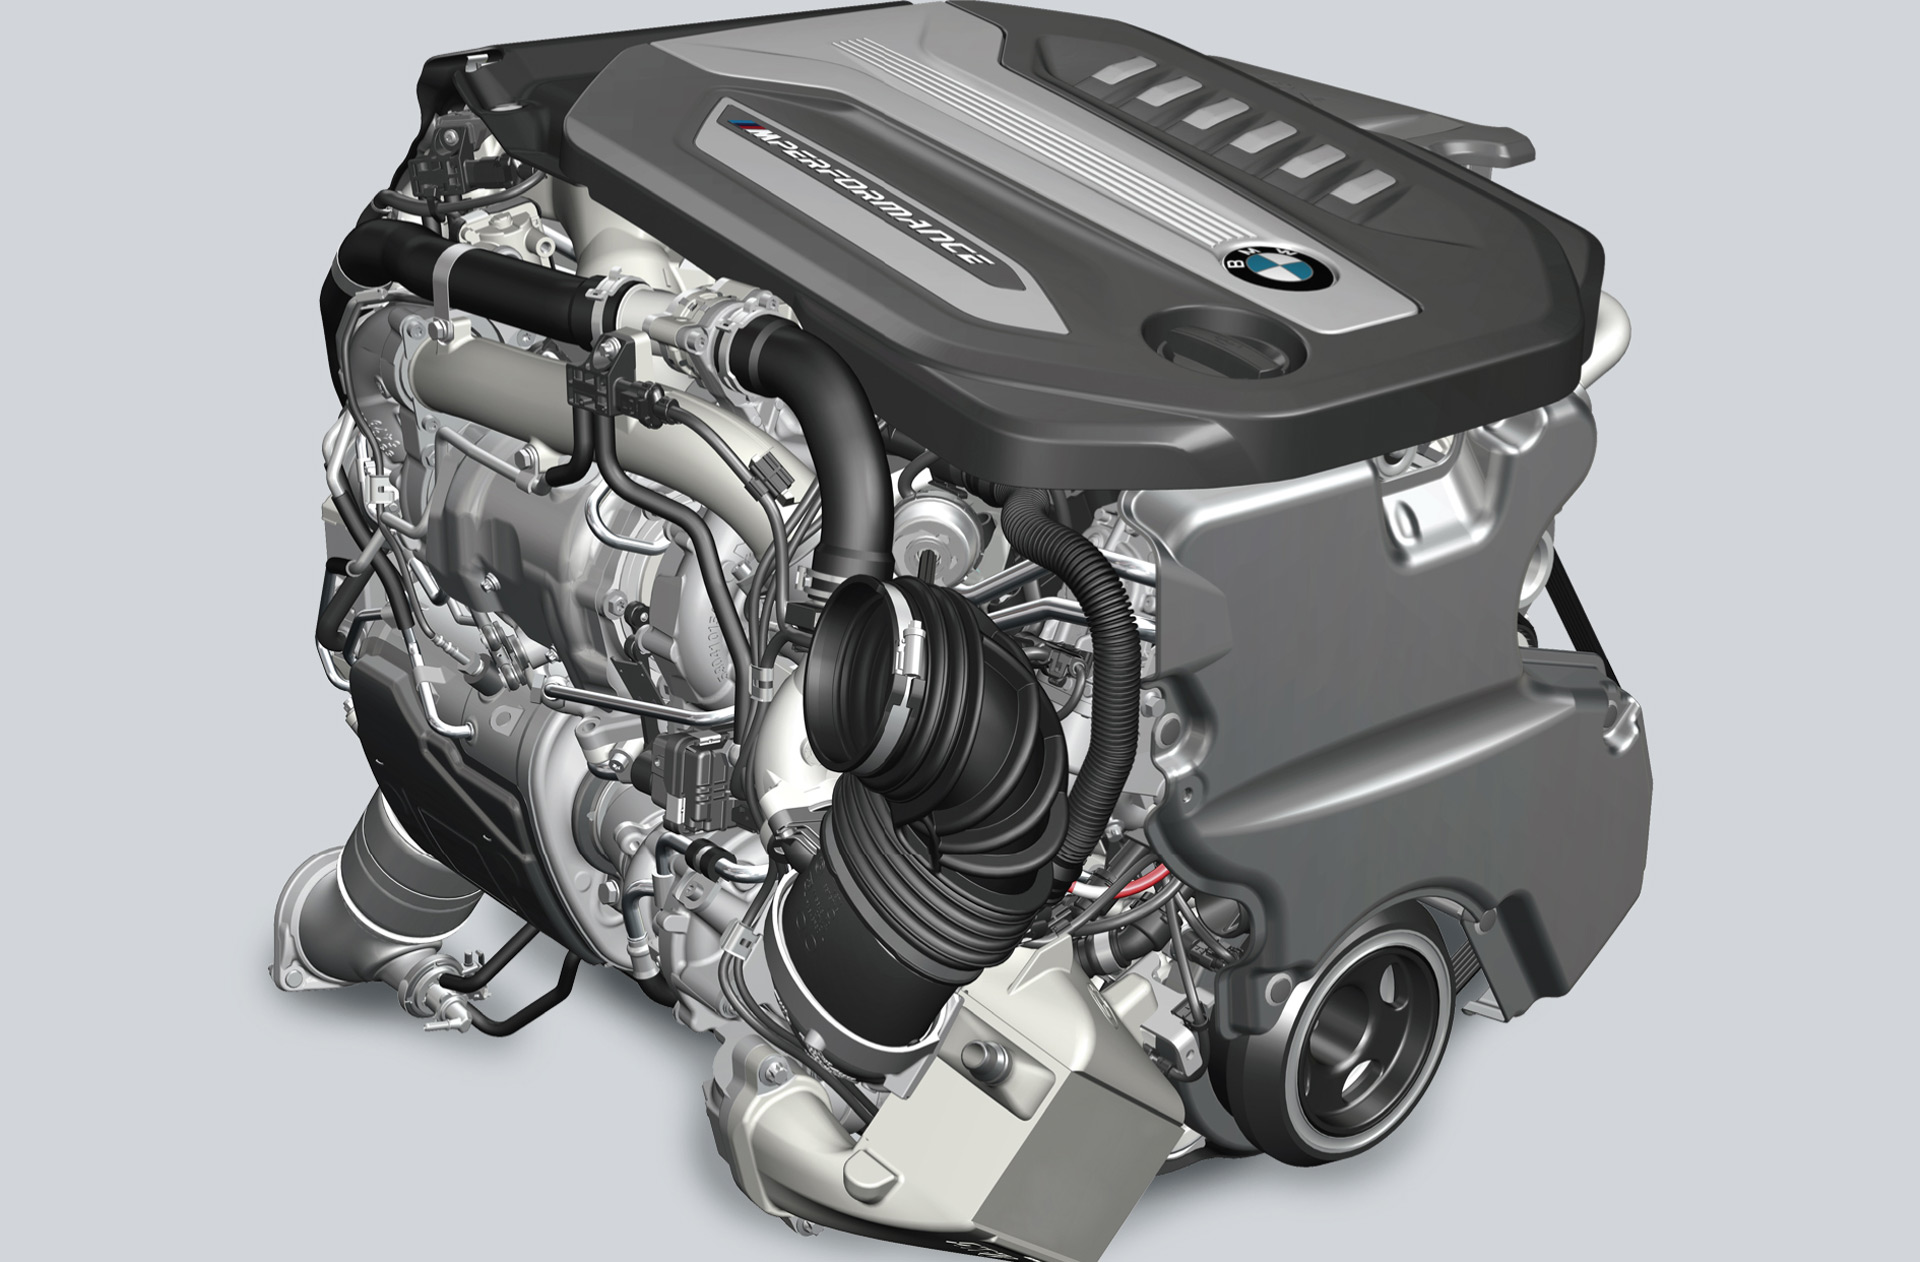 Full details on BMW’s new quadturbocharged diesel